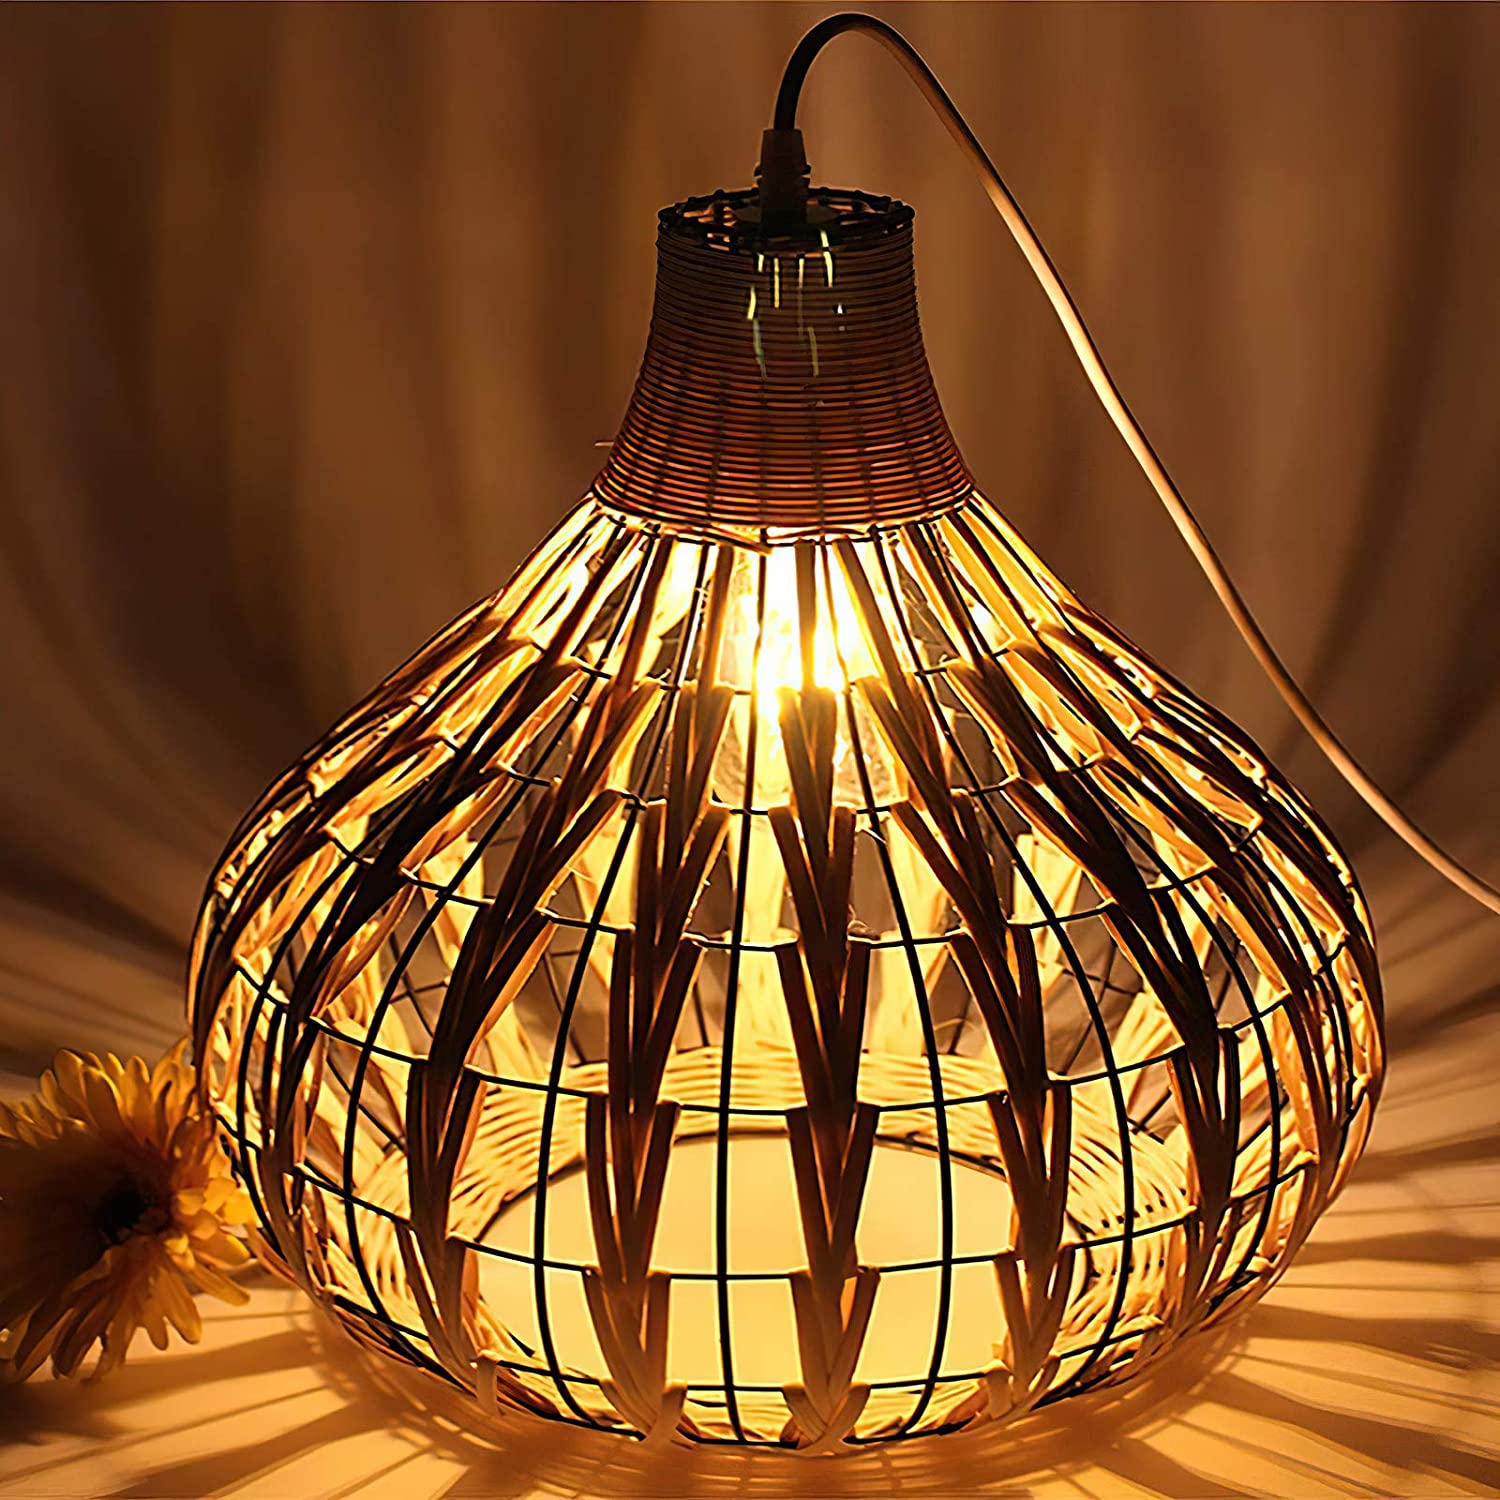 Handmade-Natural-Rattan-Lamp-Shade-2 10 Unique & Wonderful Lampshade Ideas